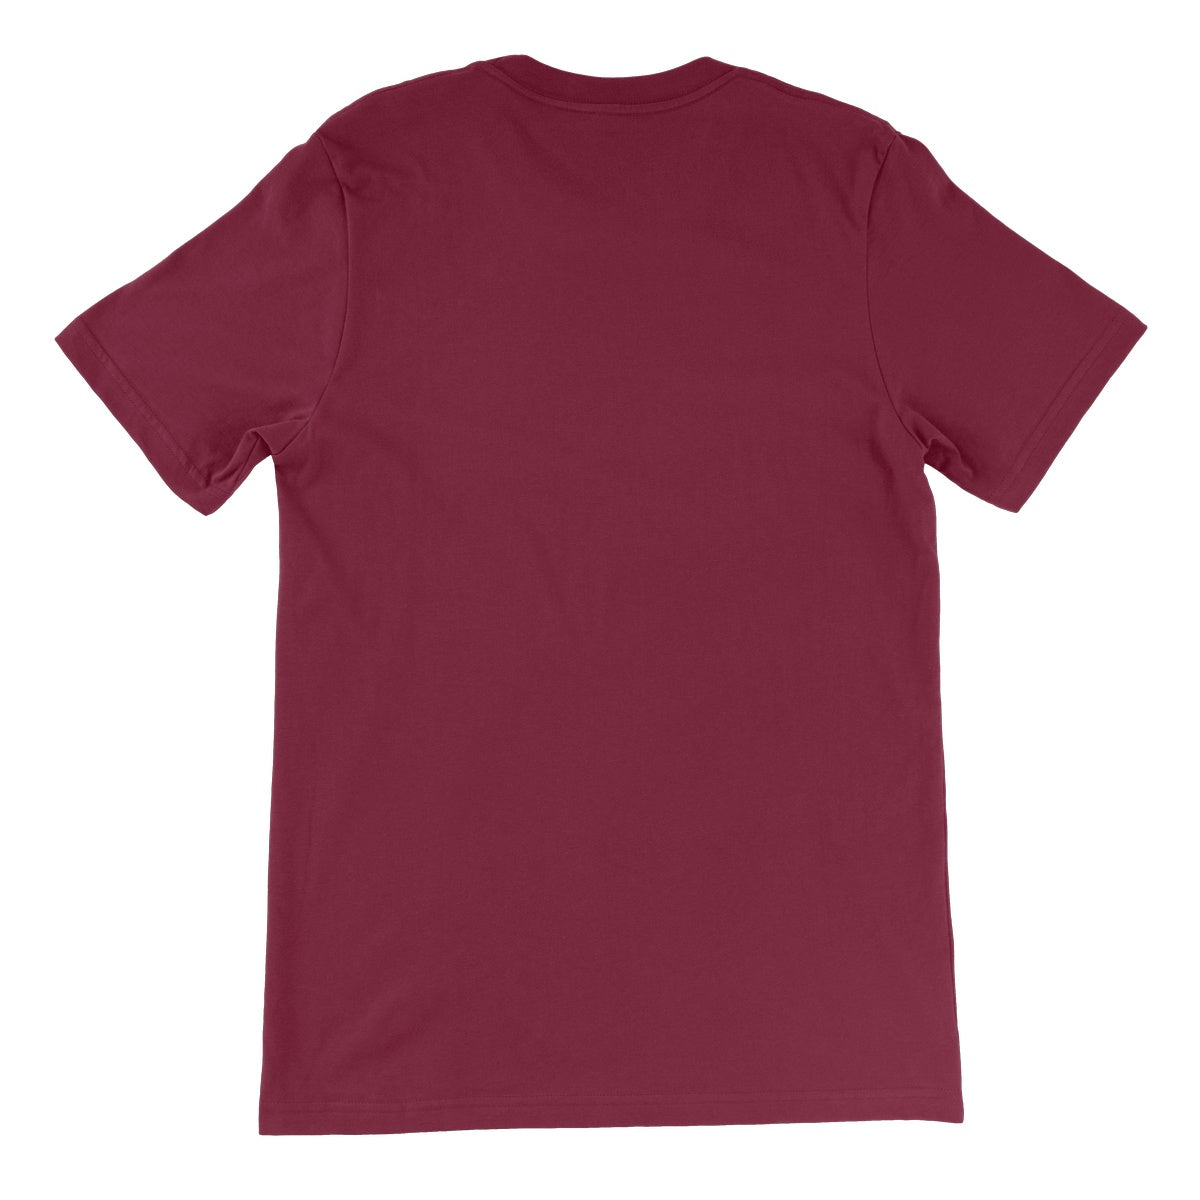 Dunkirk Illustrated Tee Unisex Short Sleeve T-Shirt